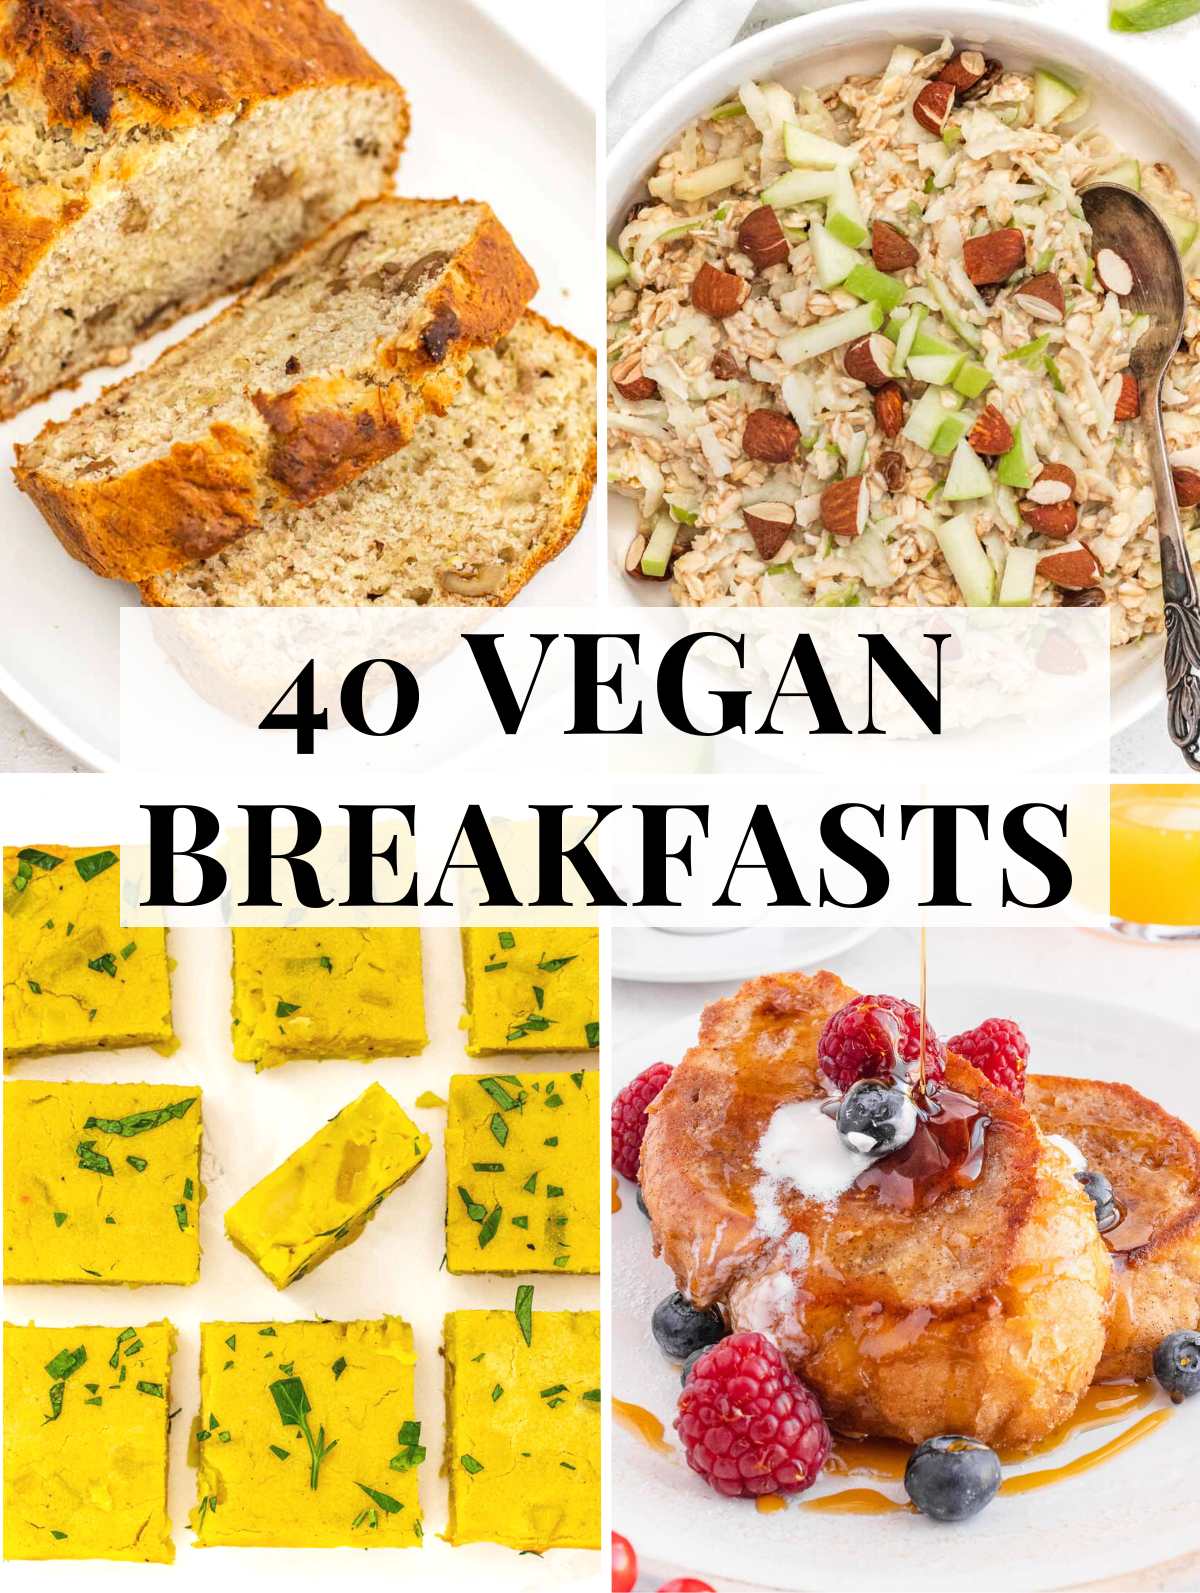 Vegan breakfast ideas